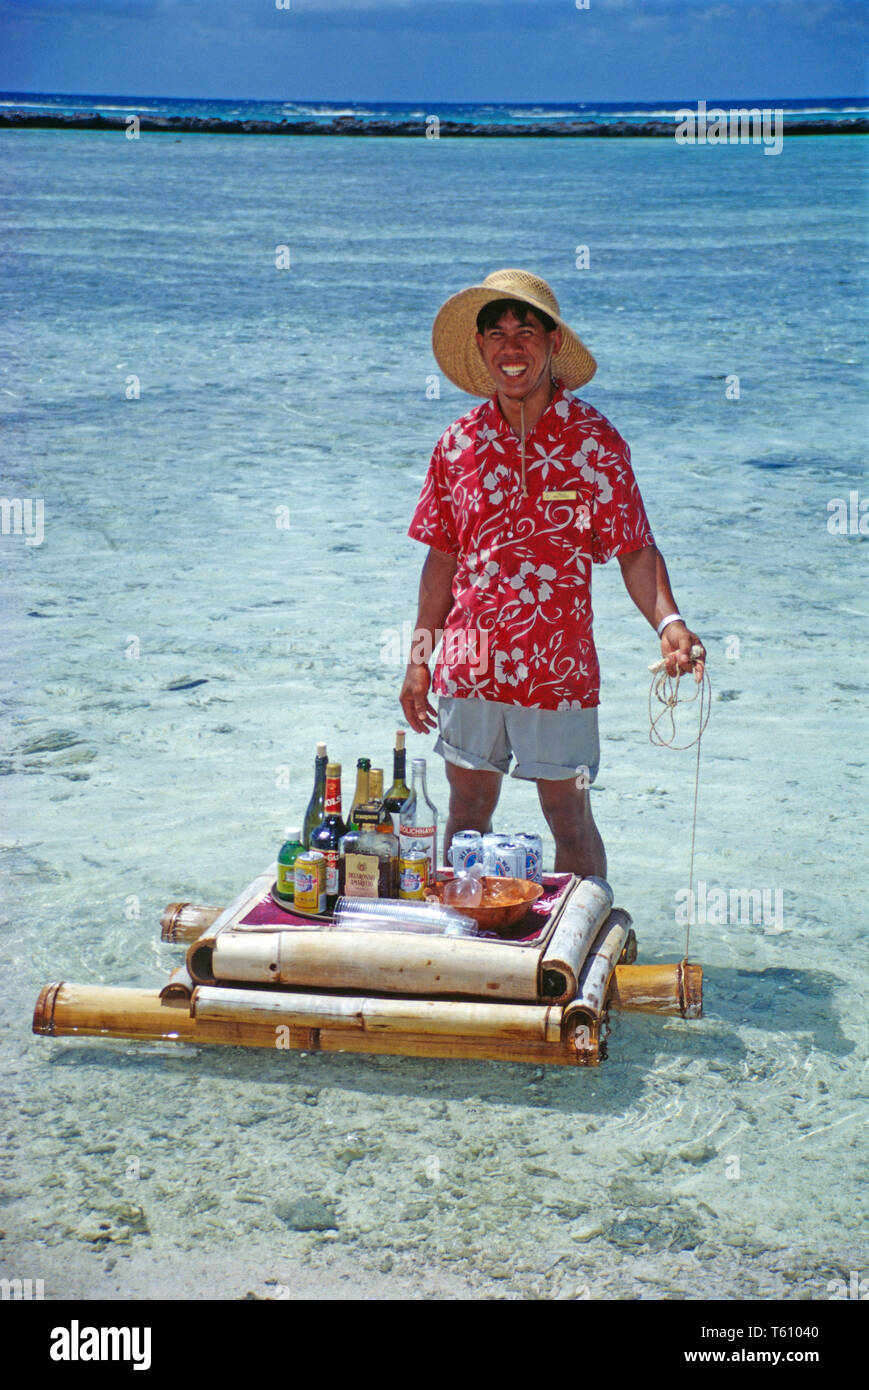 Tahiti. Local man. Drink seller at the beach. Stock Photo